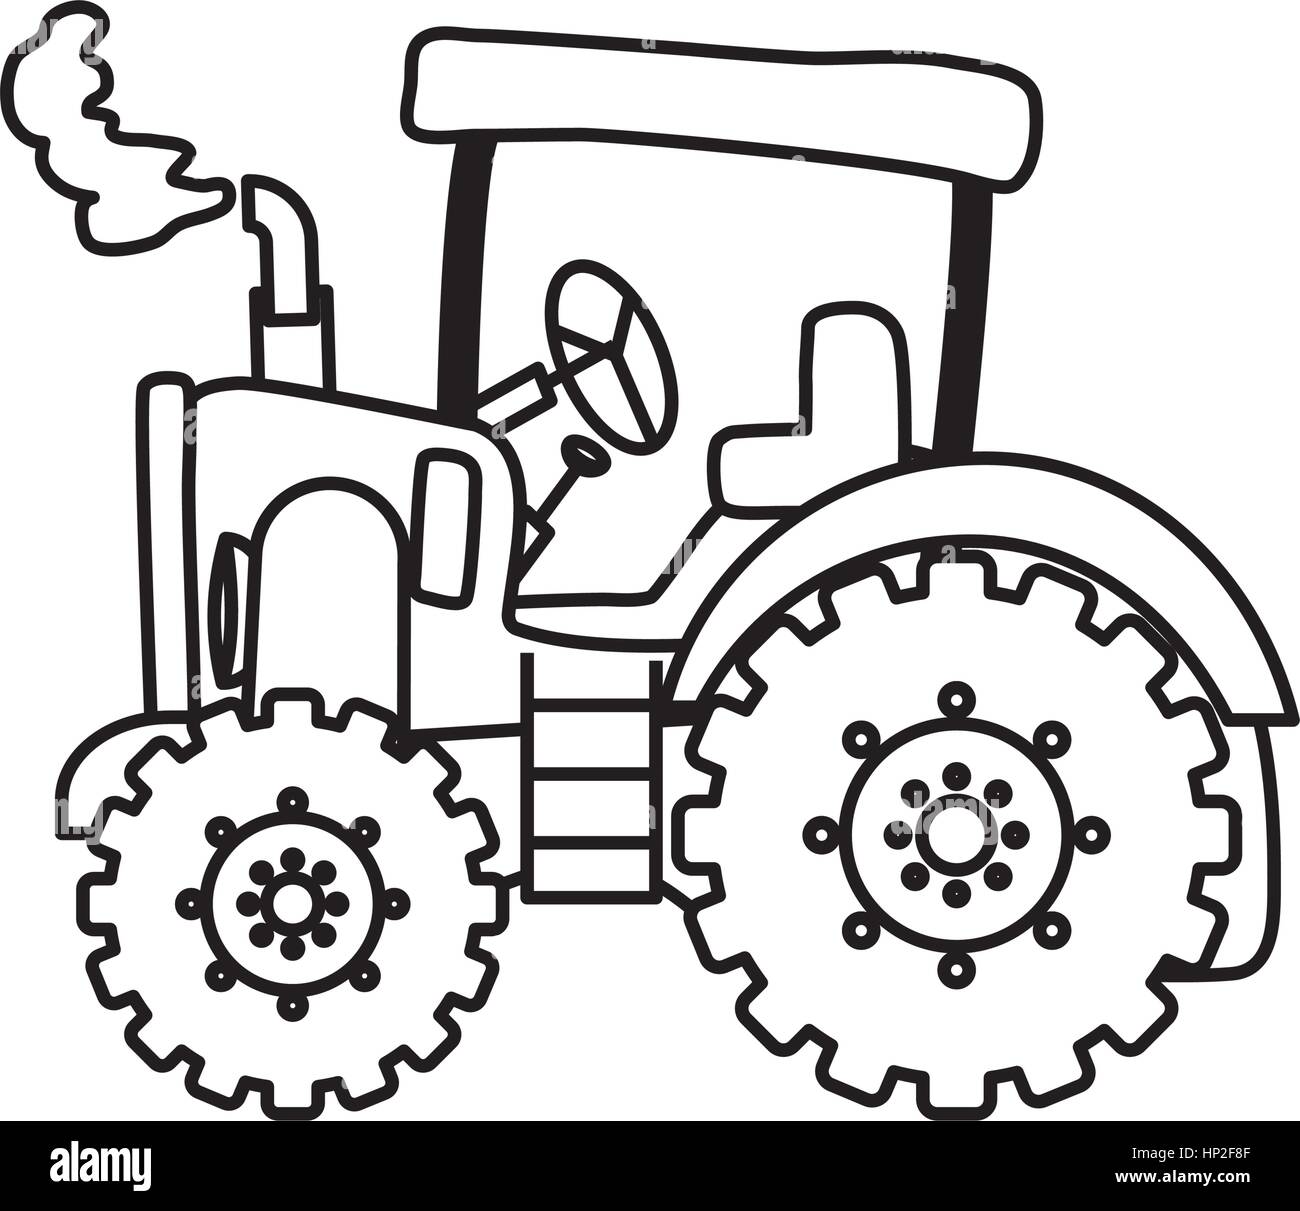 Tractor Wheels Stock Vektorgrafiken kaufen   Alamy